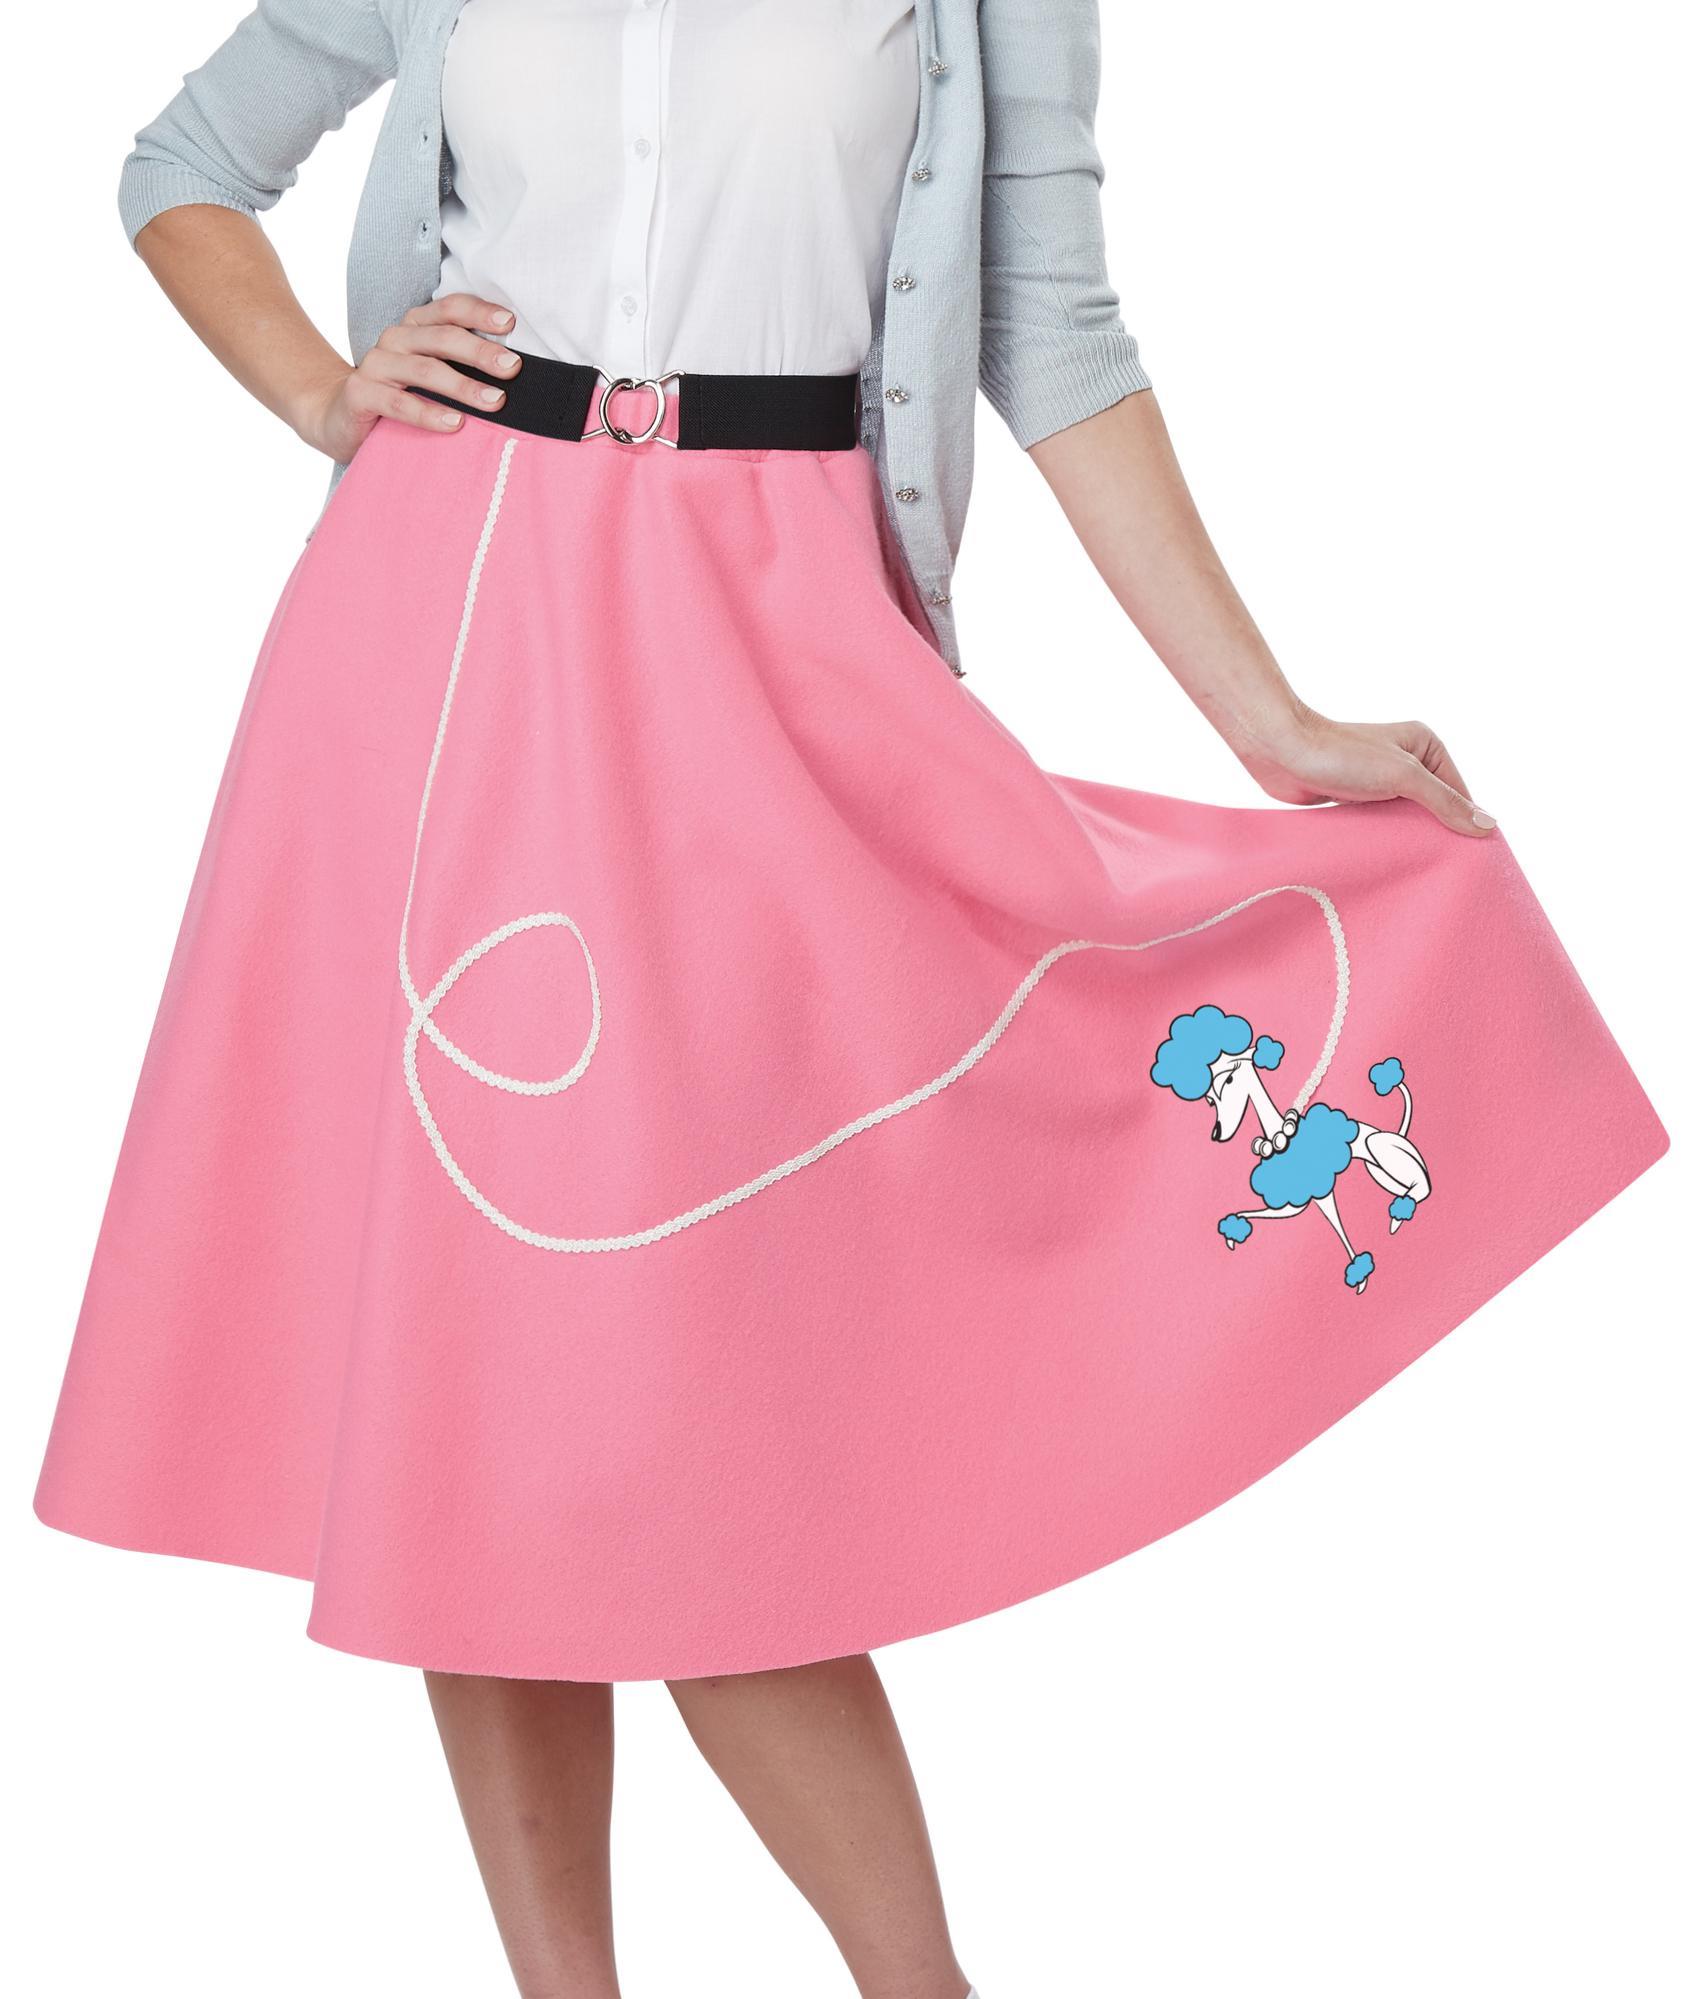 50s Poodle Greaser Sock Hop Bopper Rock Roll Womens Costume Pink Skirt